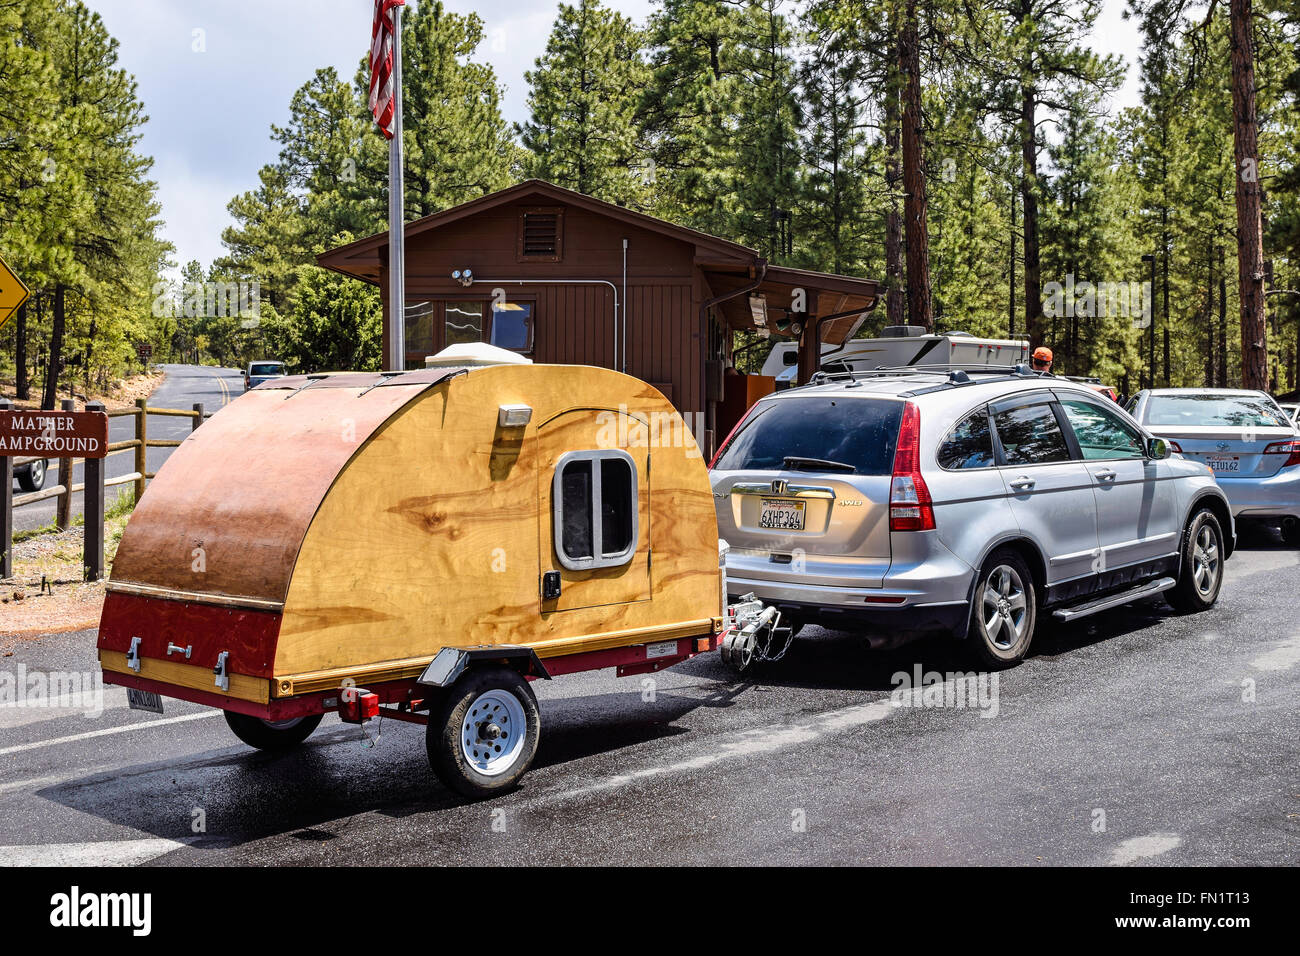 GRAND CANYON NATIONAL PARK, USA, May 29, 2015: Self-made wooden teardrop camping trailer at a Grand Canyon campground. Stock Photo